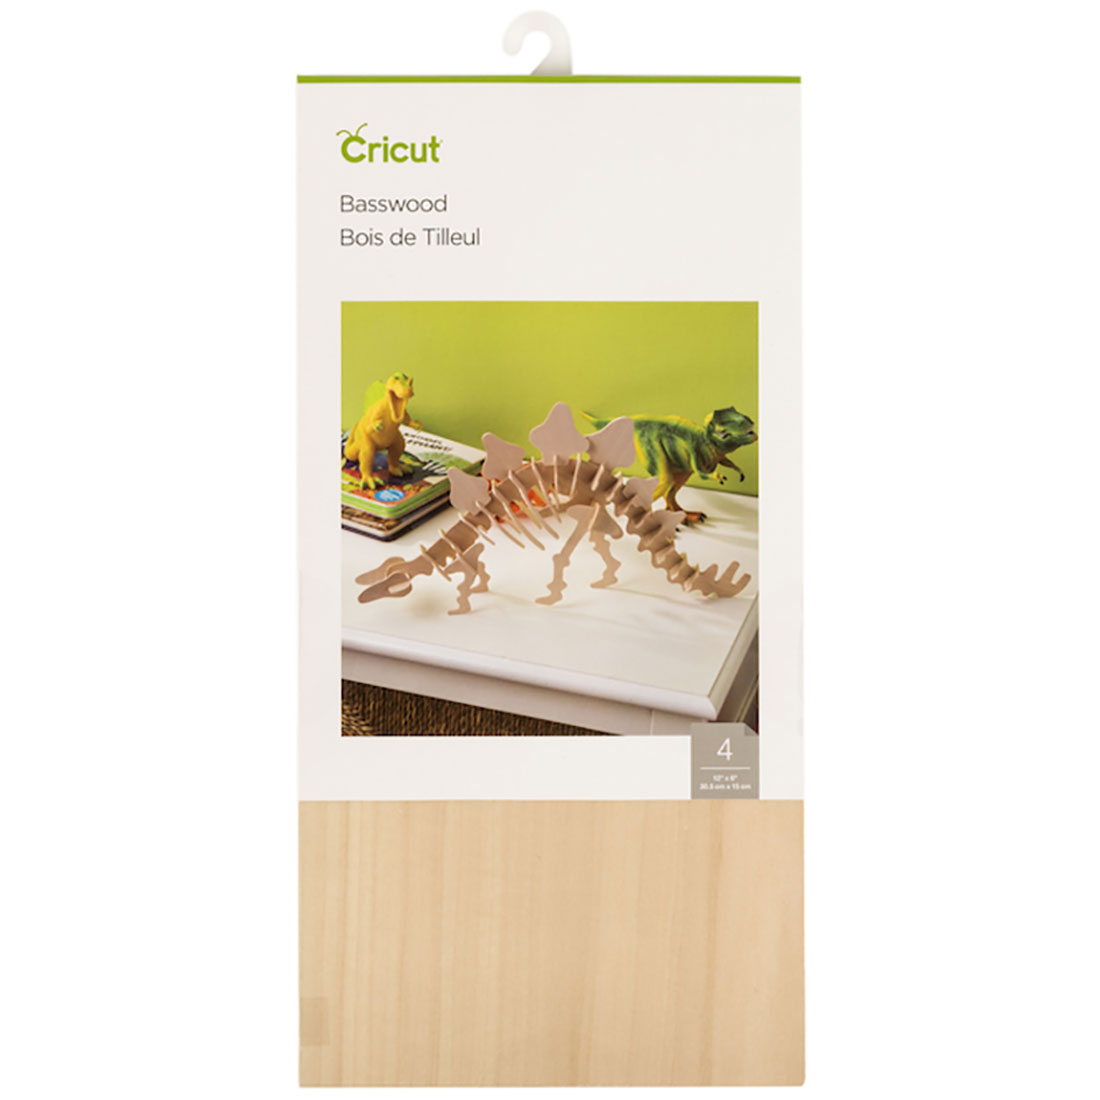 Cricut Basswood Availble for Cricut Maker Users 